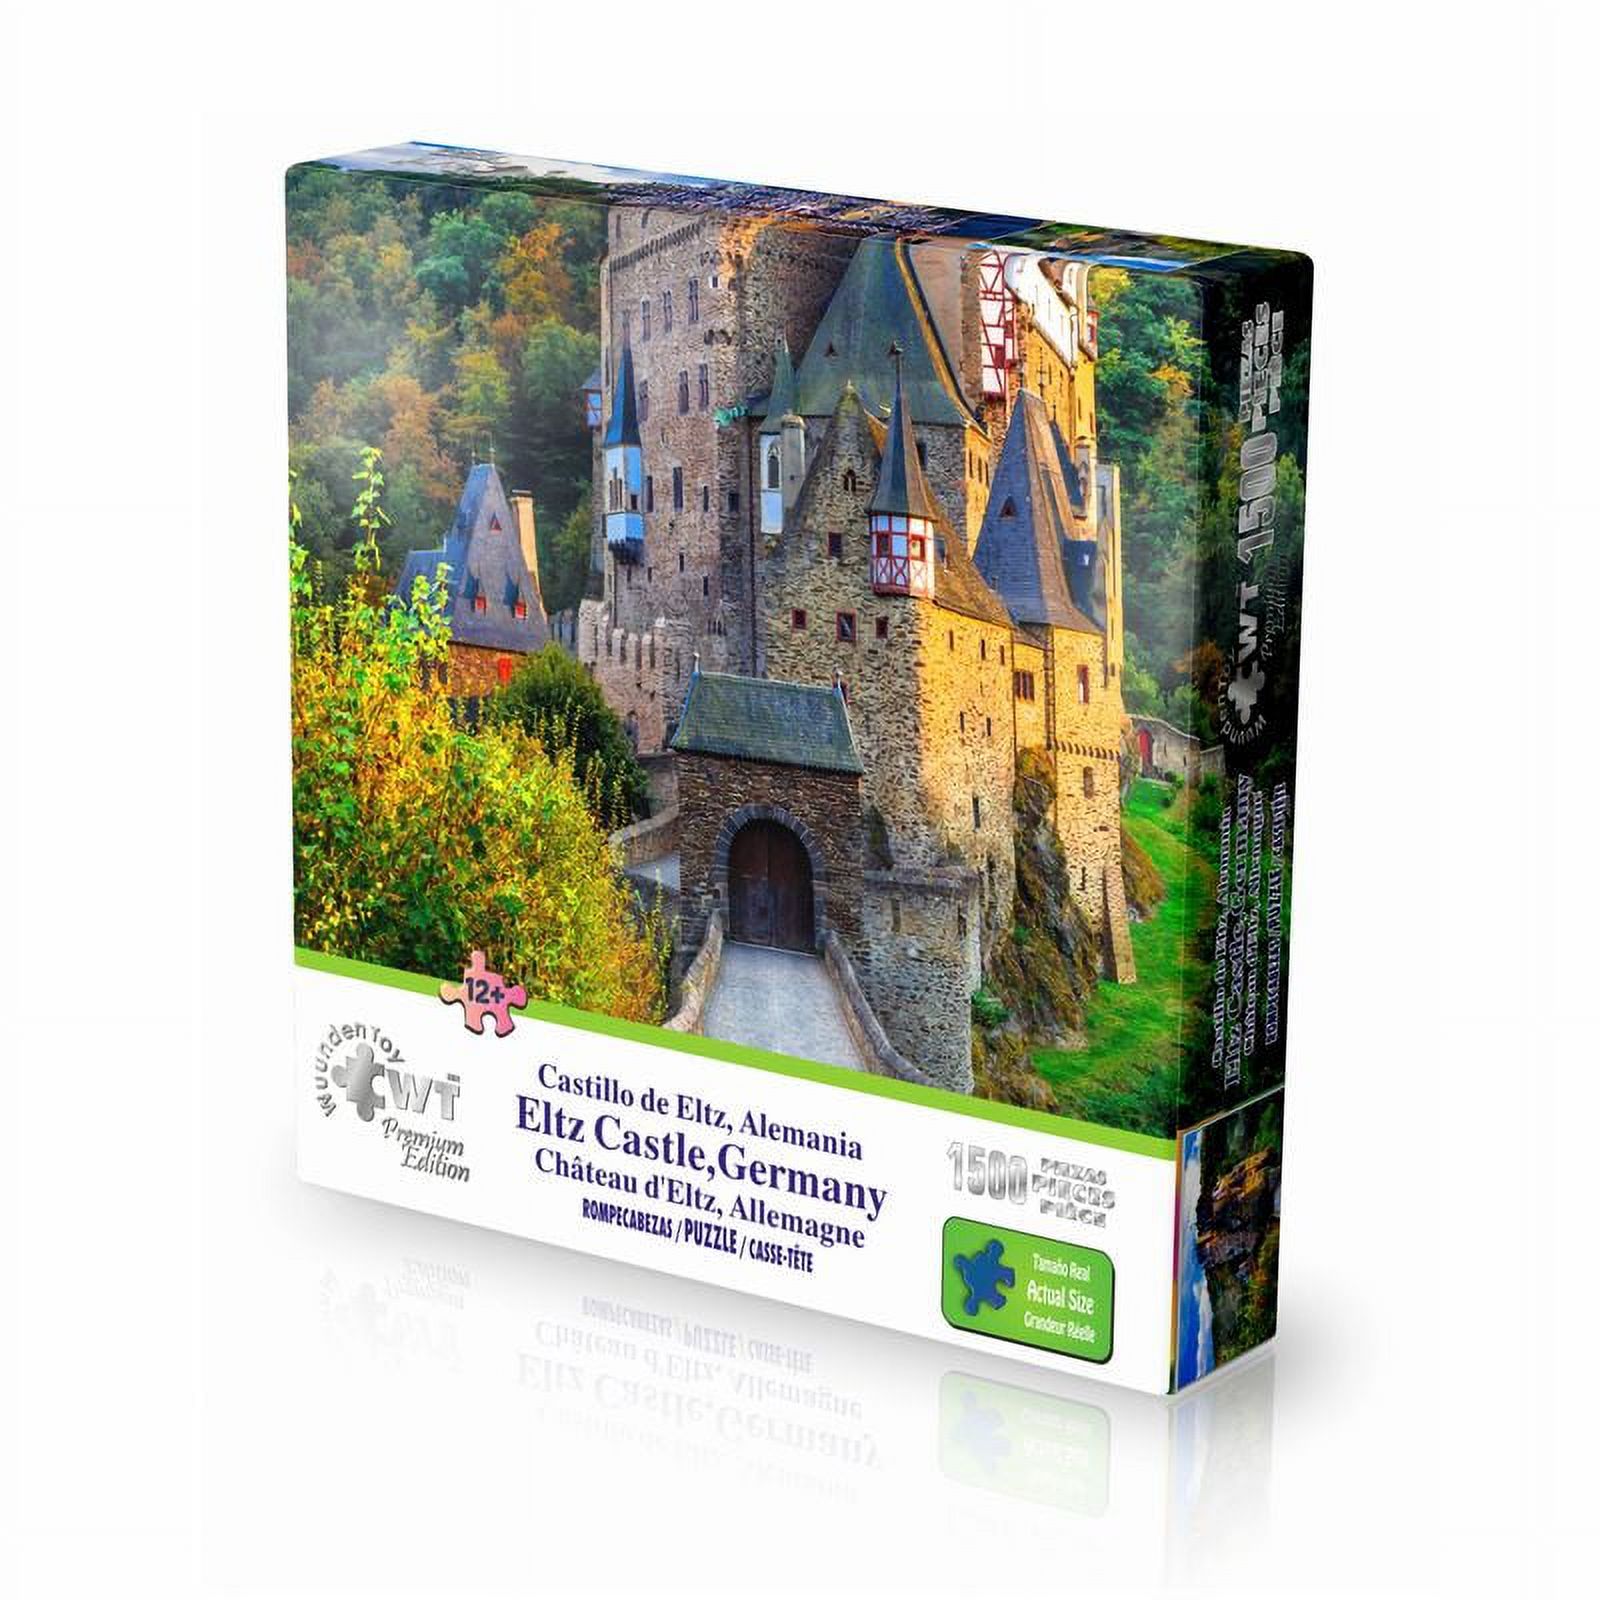 Wuundentoy Premium Editon "Eltz Castle, Germany" 1500 Pieces Jigsaw Puzzle - image 2 of 7